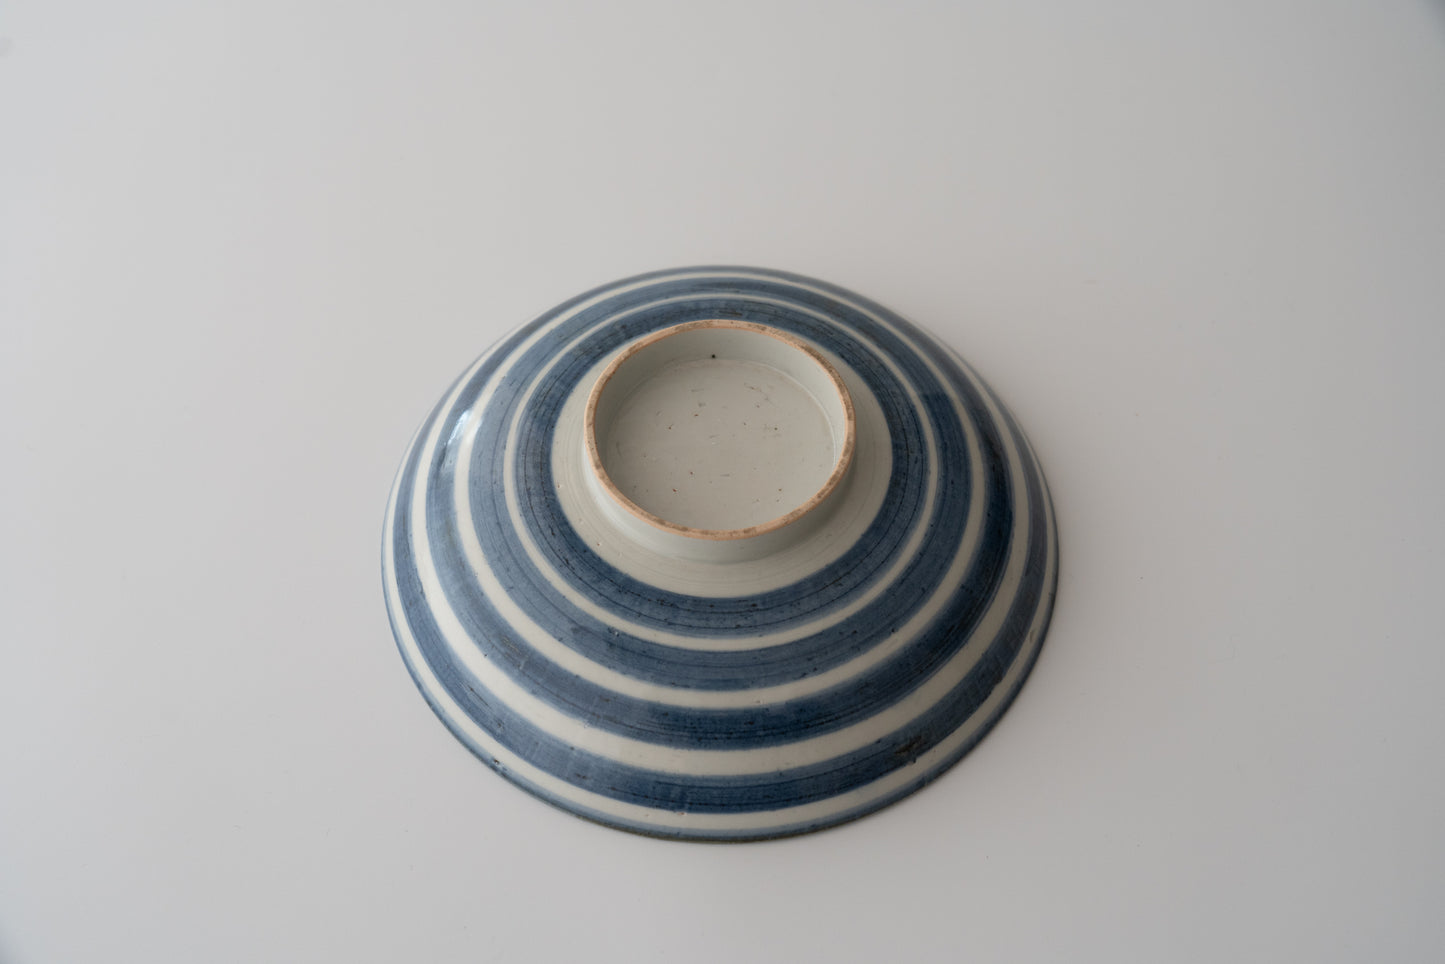 Flat bowl with stripe design, Old imari ware